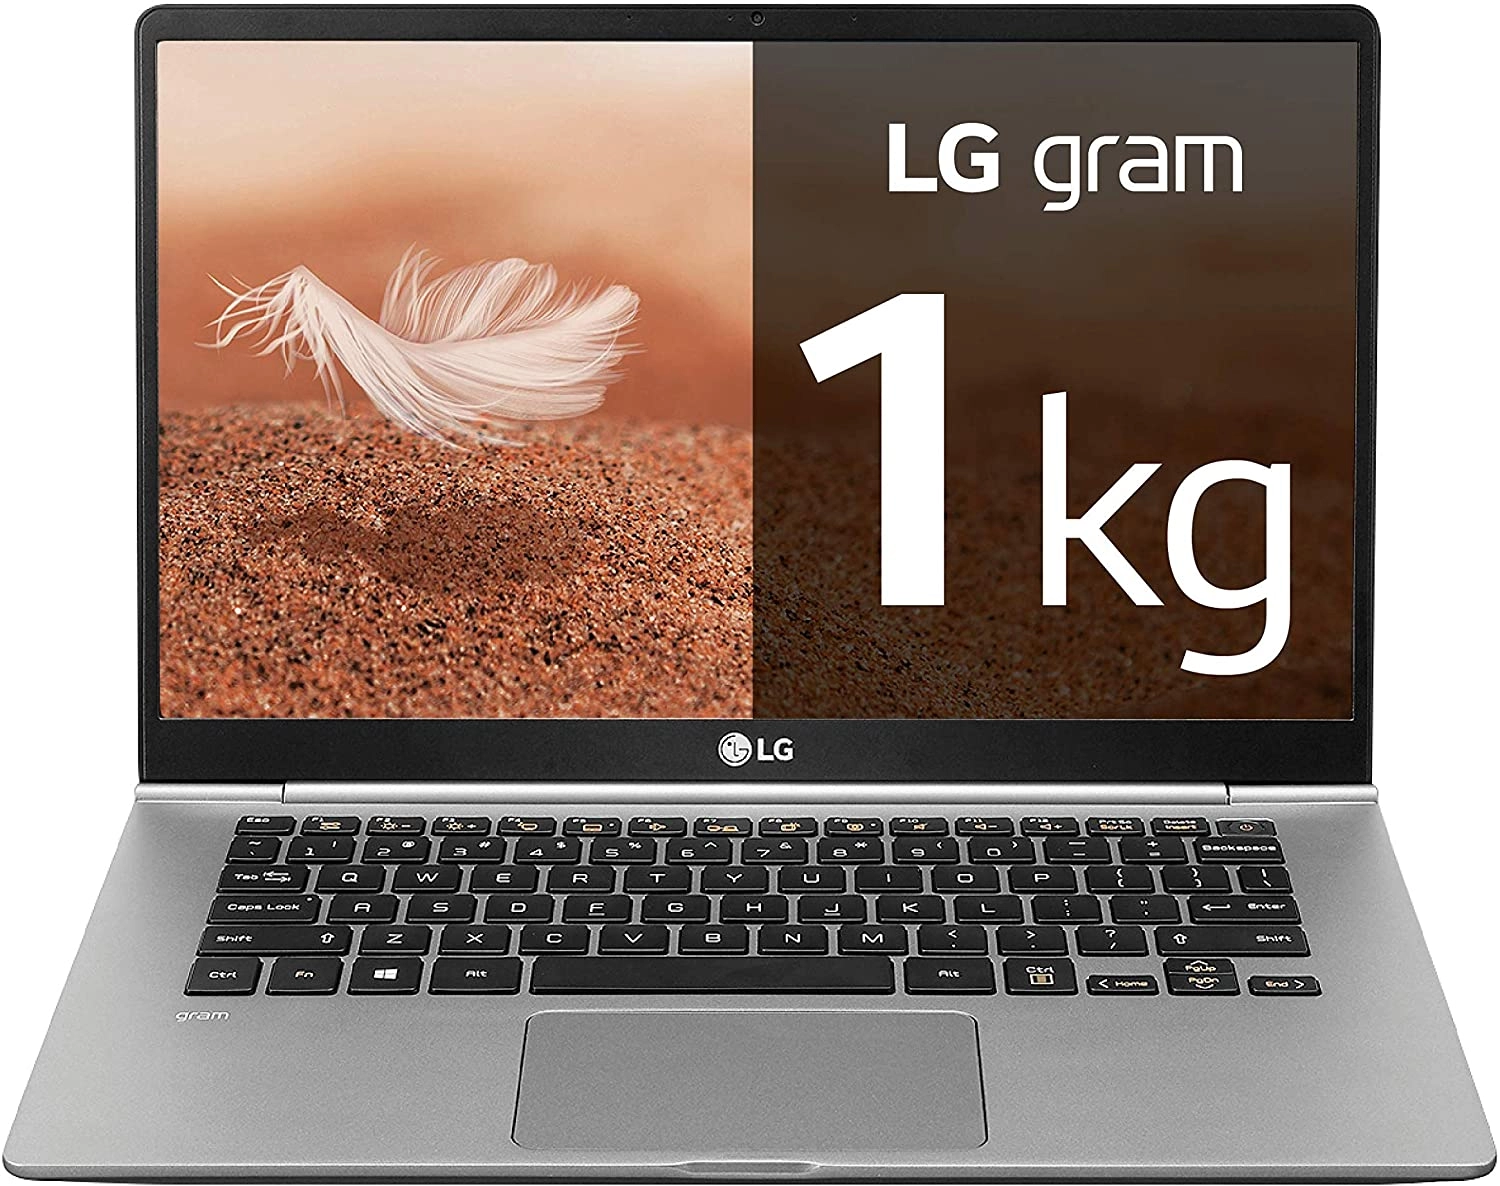 LG Gram 14Z990-V laptop image